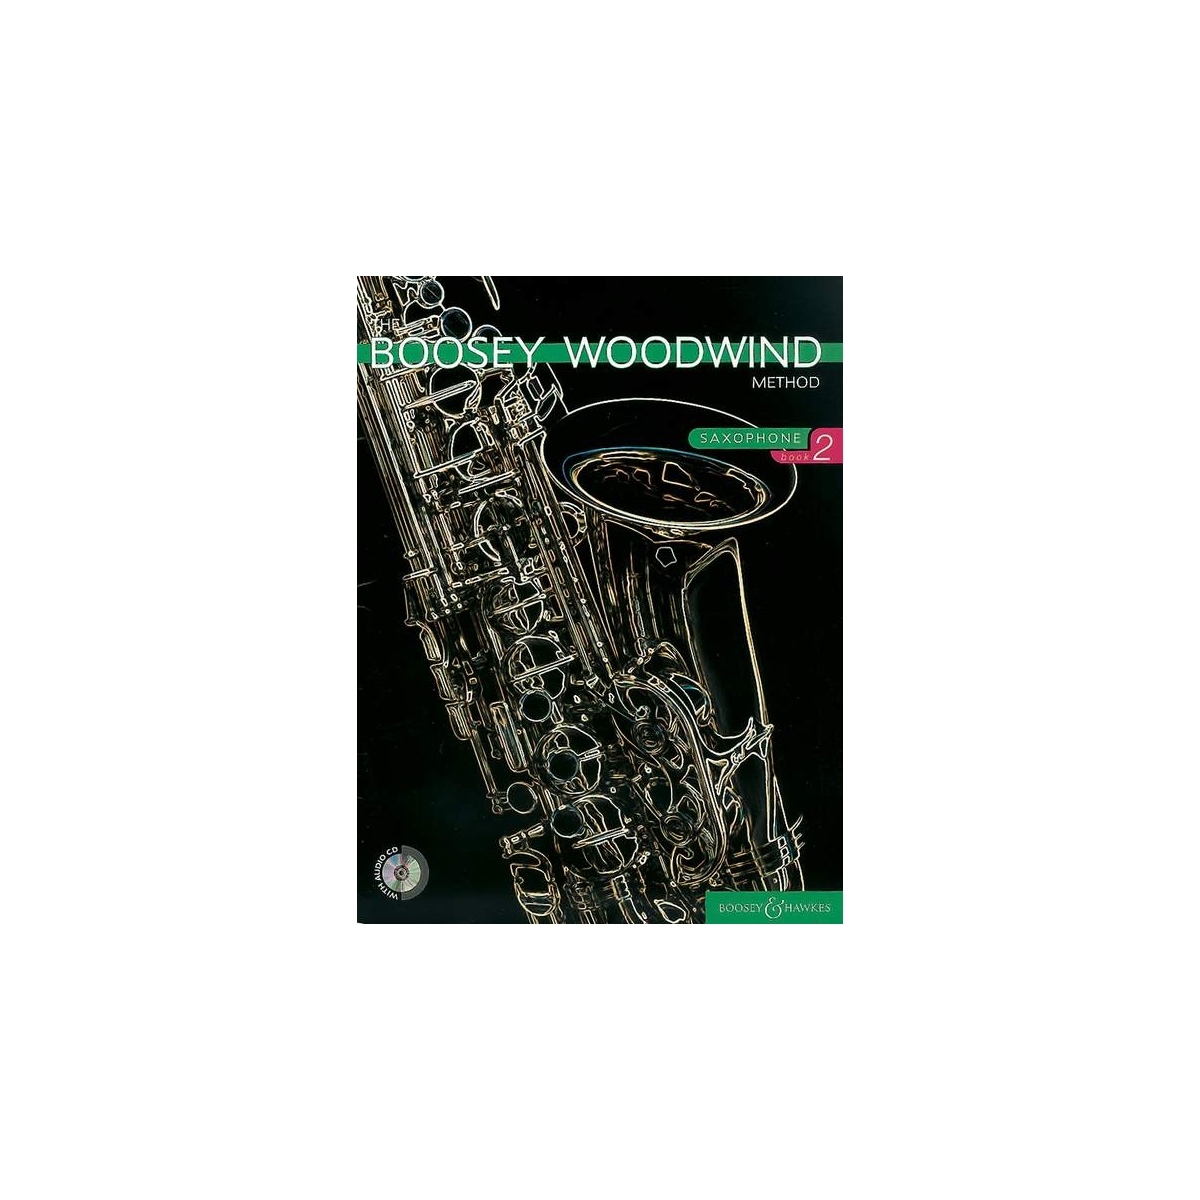 The Boosey Woodwind Method [Alto Sax] Book 2